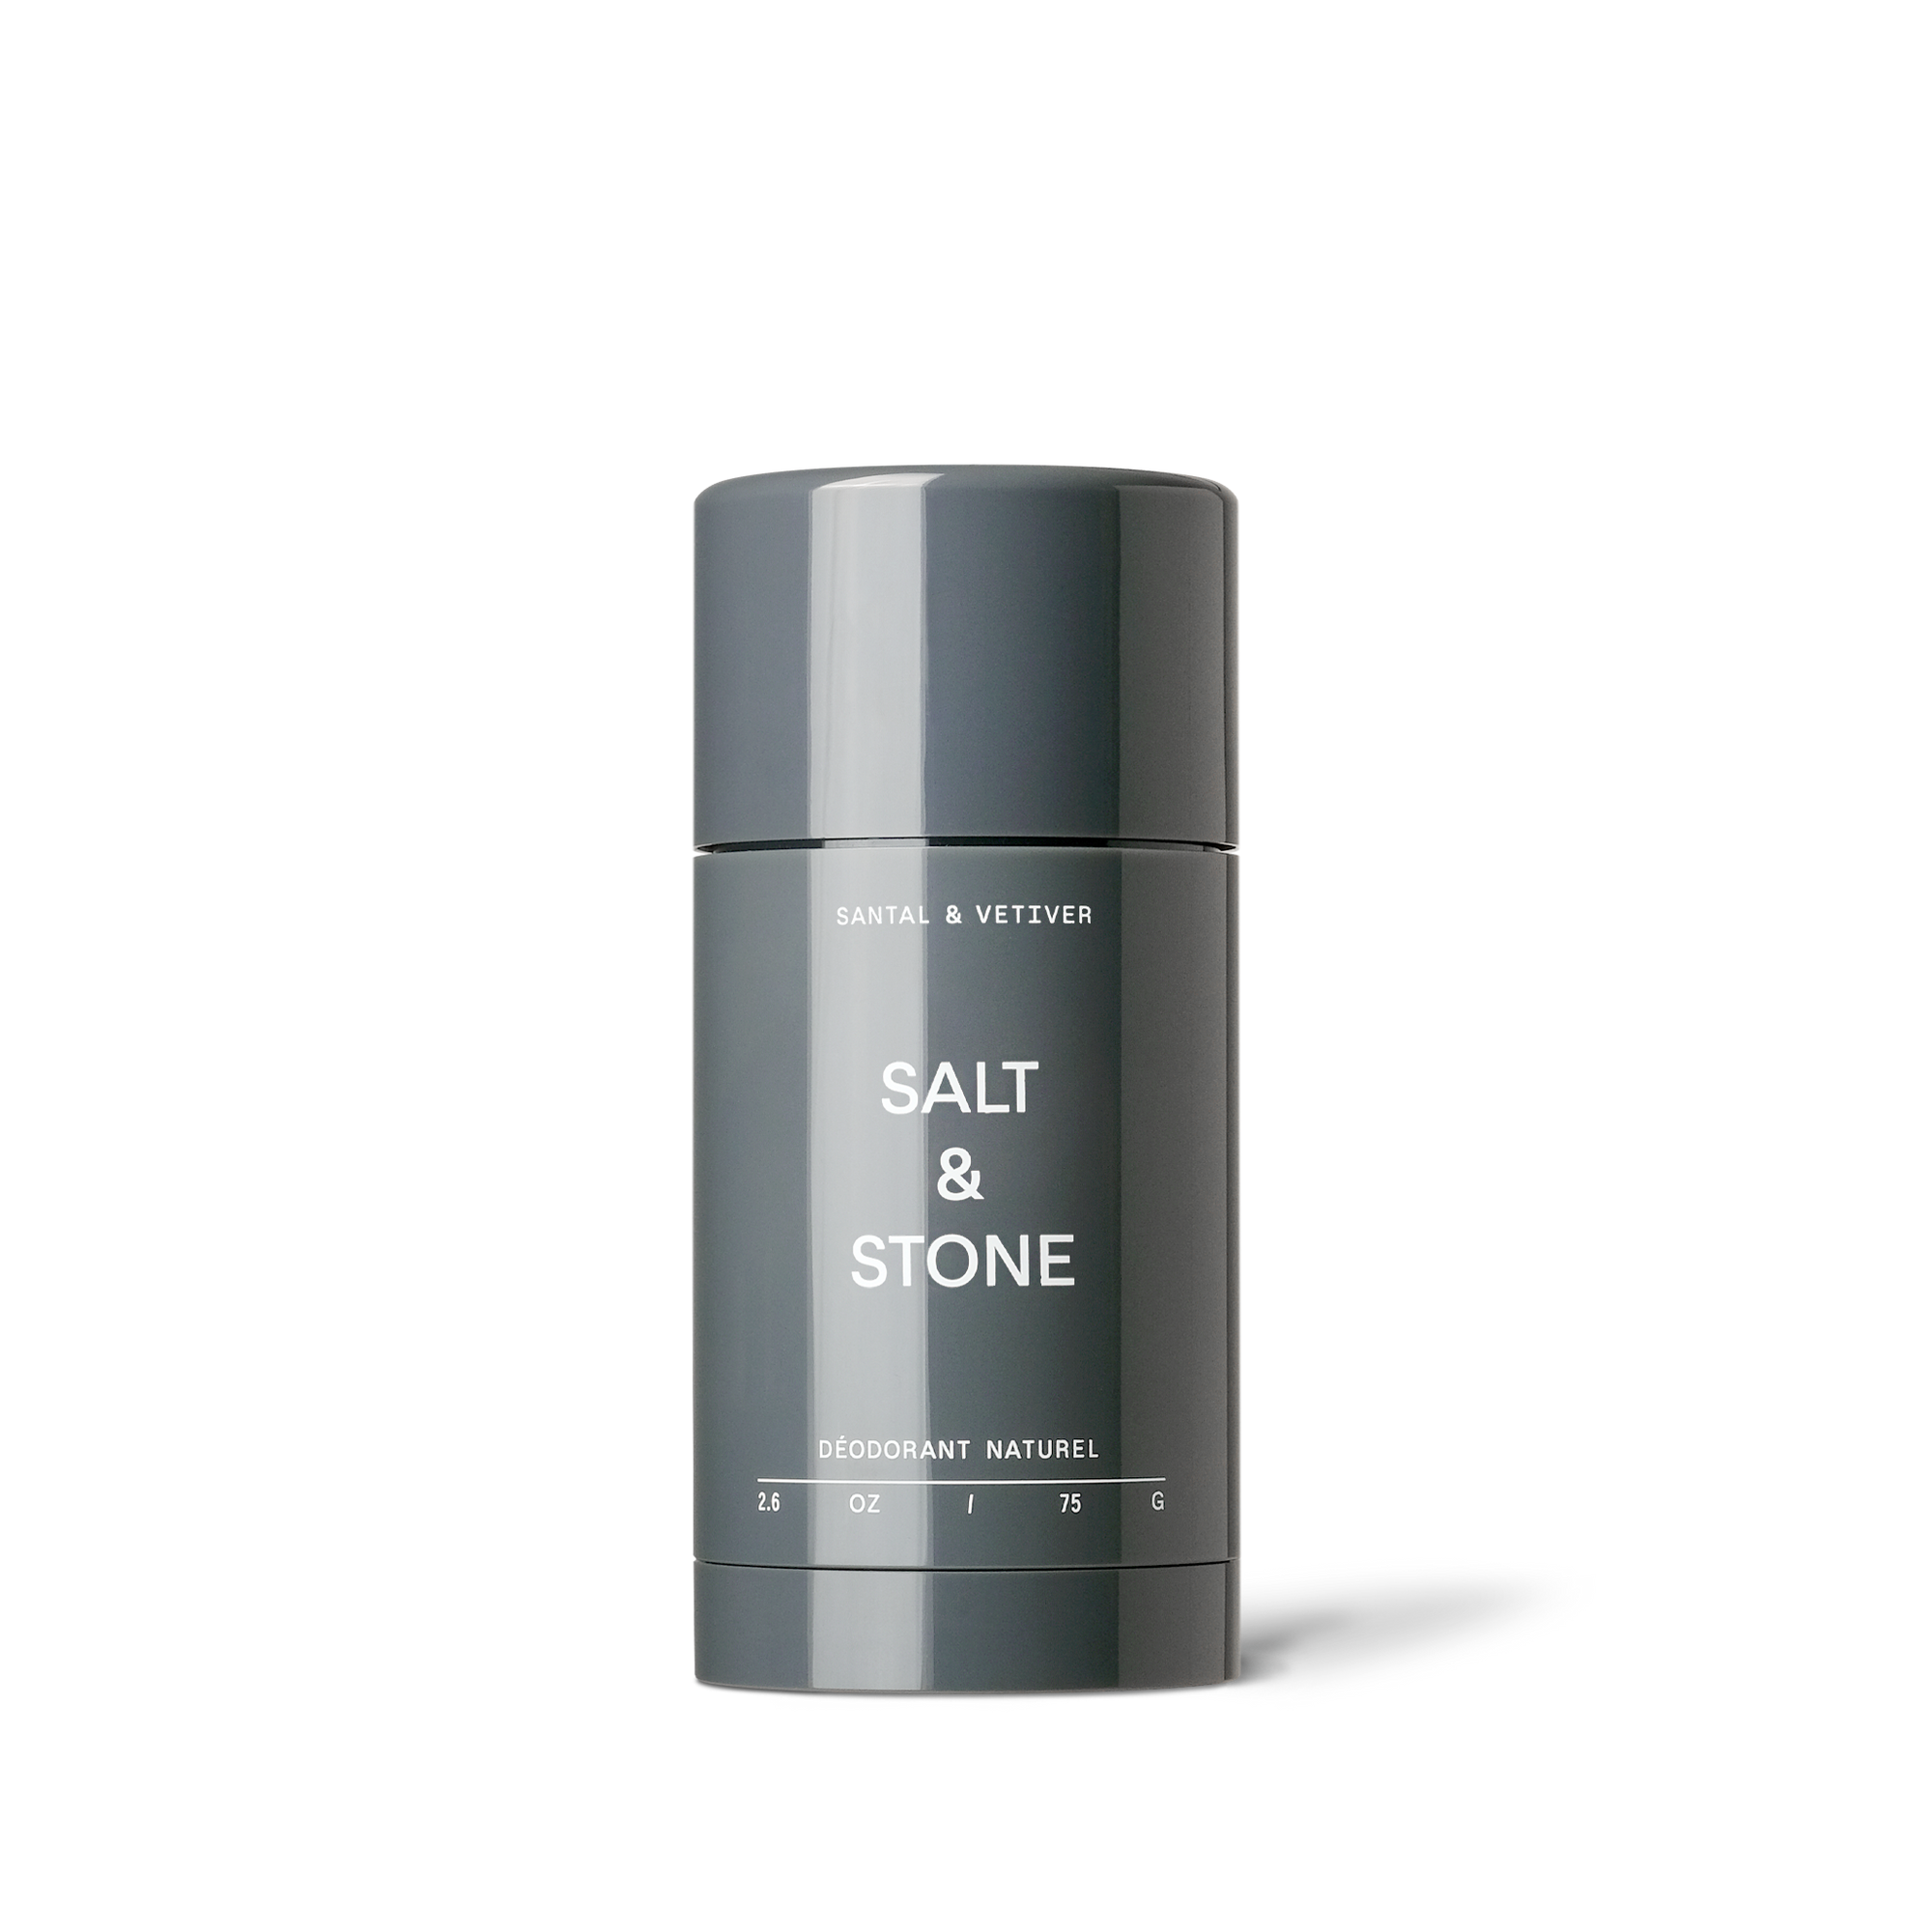 Salt & Stone Deodorant - Sensitive - Santal & Vétiver